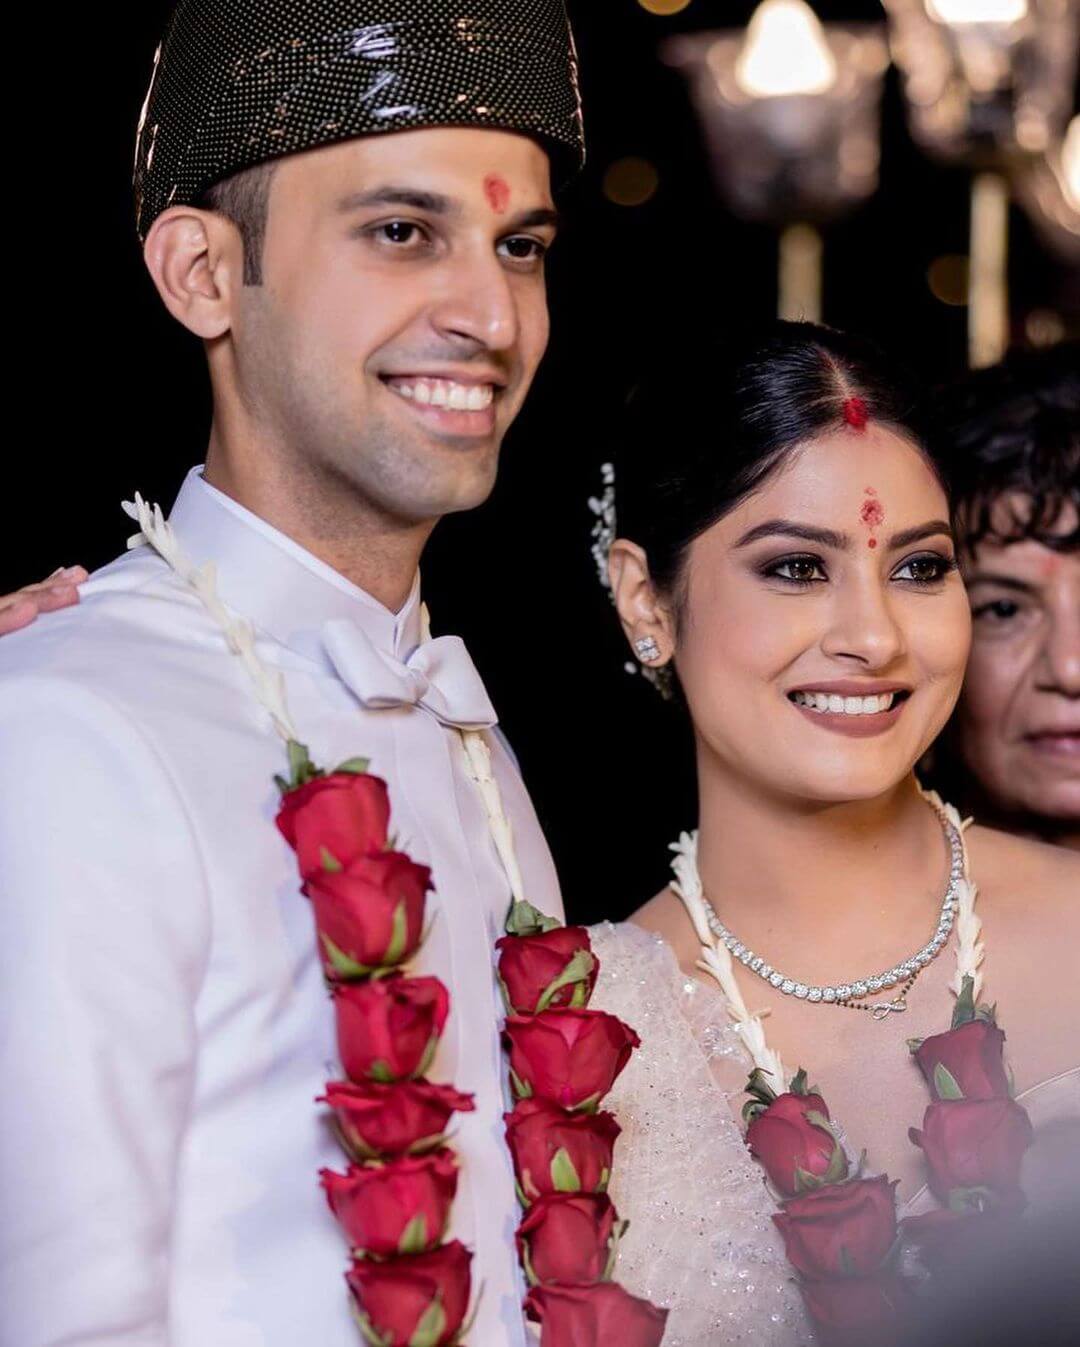 Krishna Mukherjee and Chirag Batliwalla's Parsi wedding photos